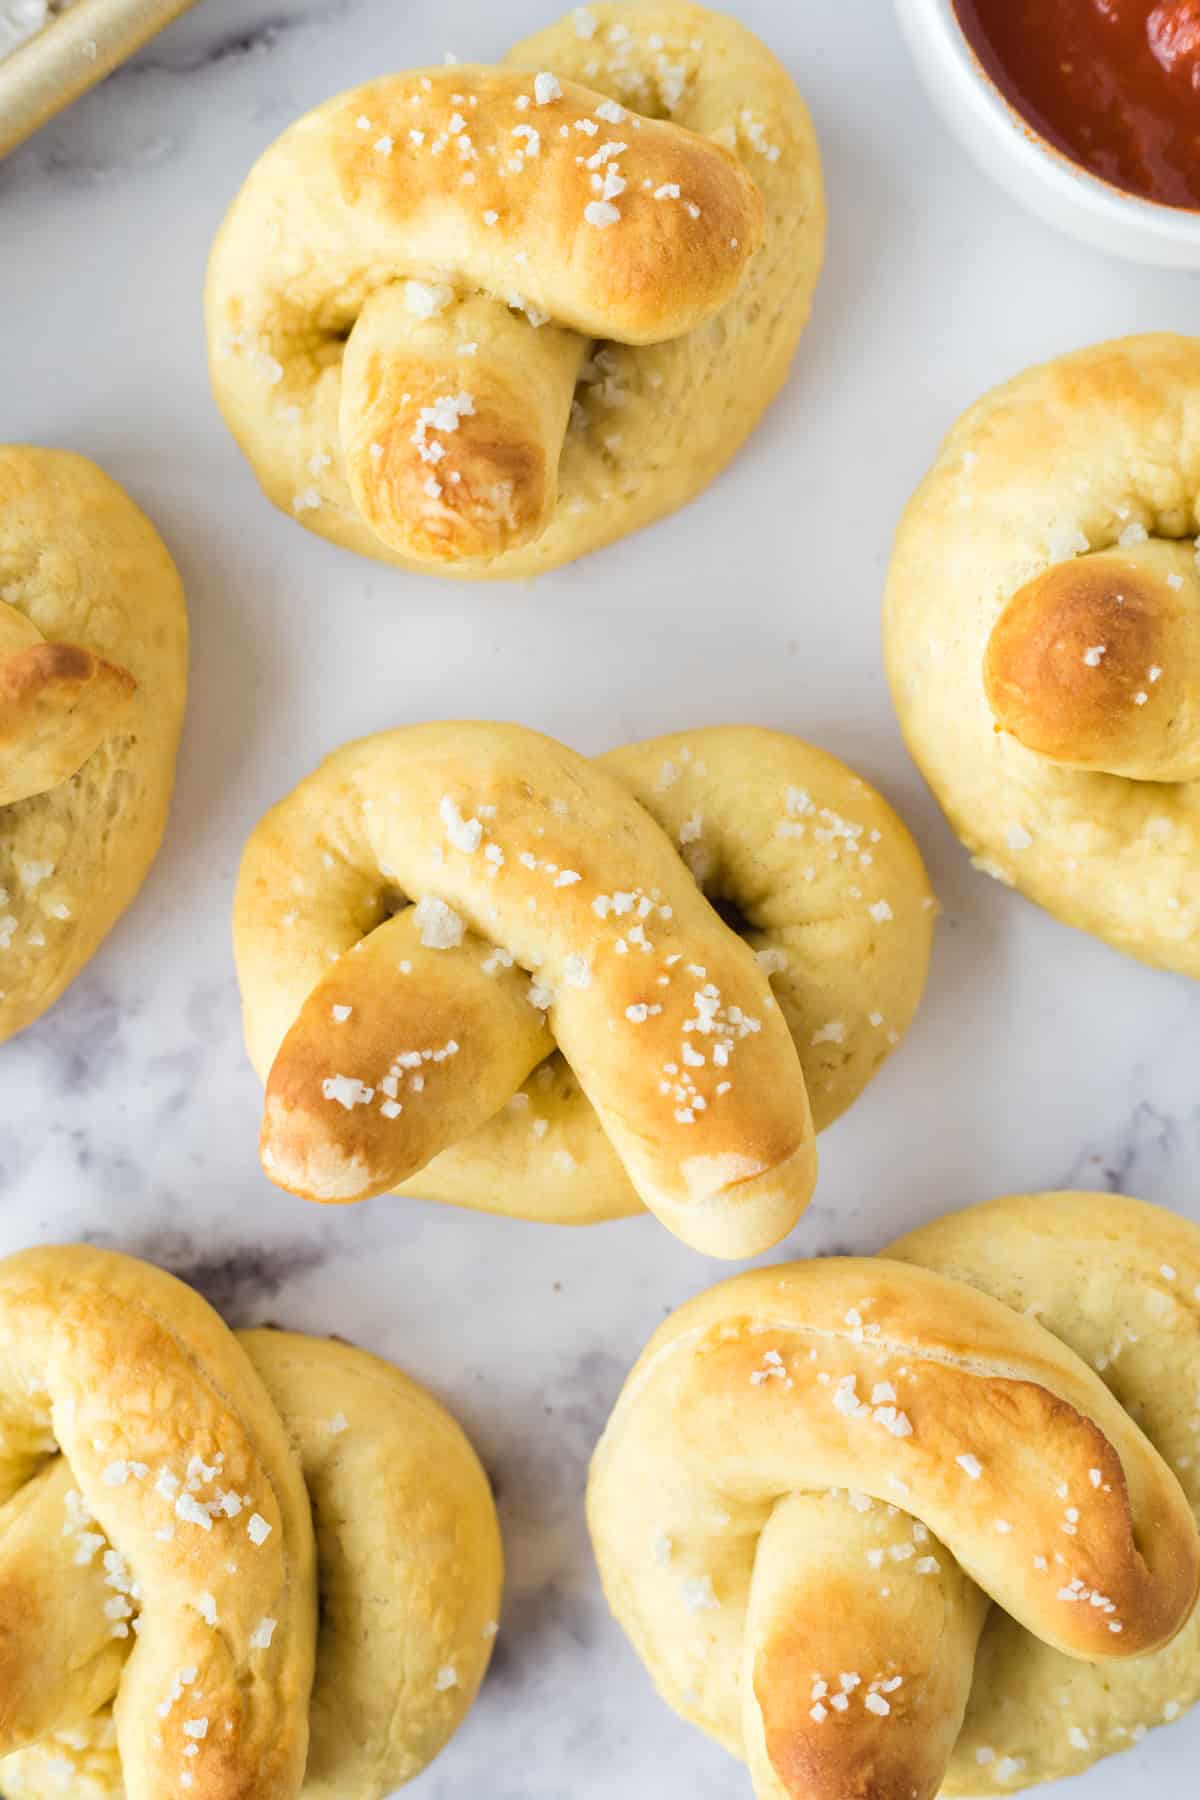 baked fresh soft homemade pretzels on a white countertop.